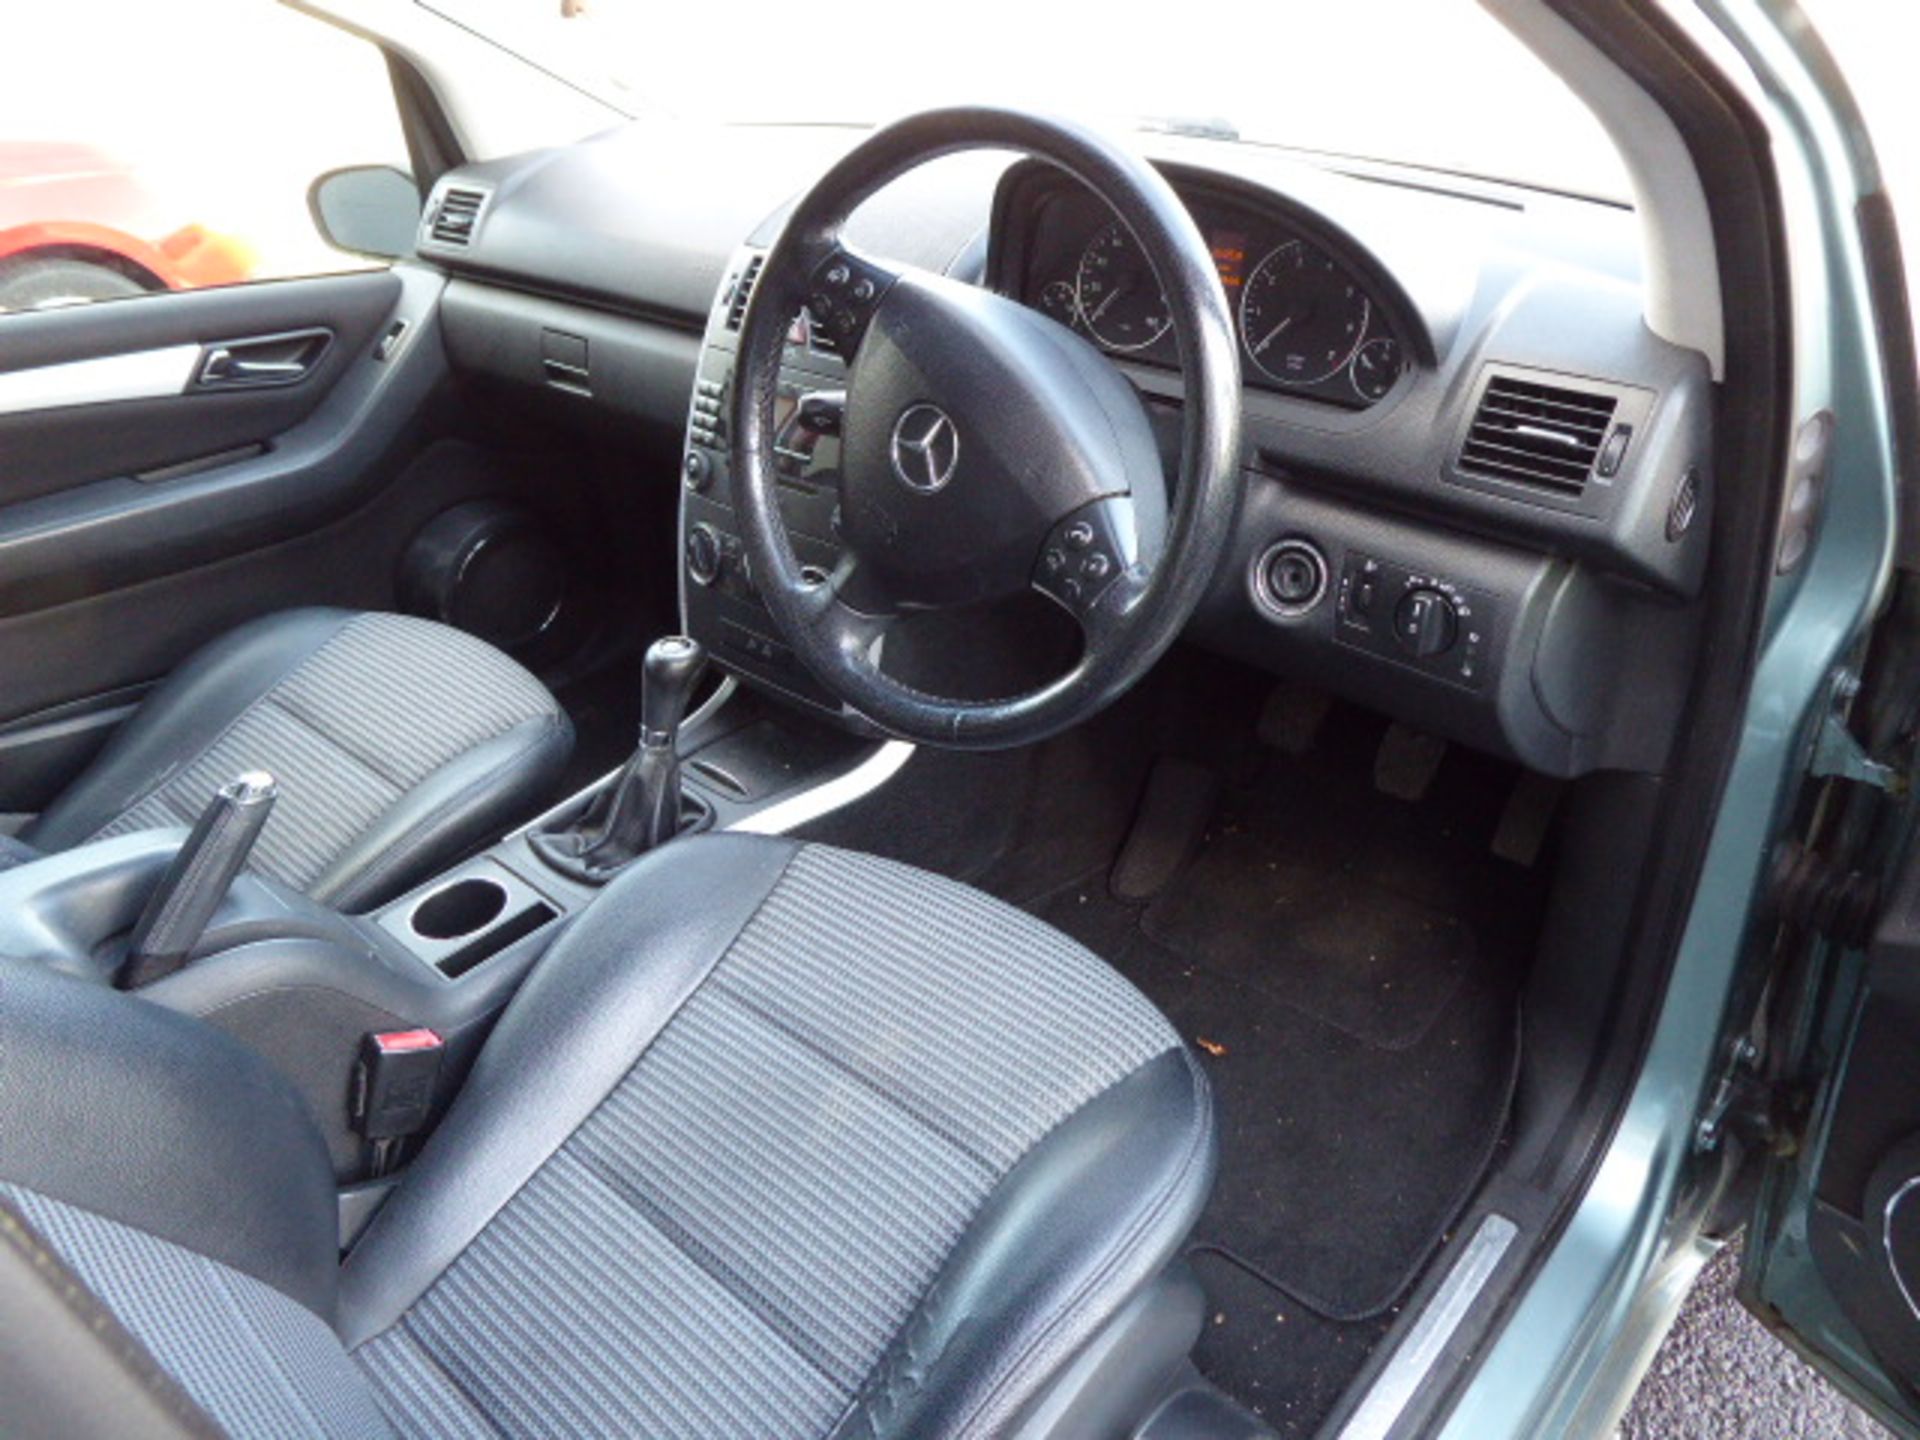 FG06 JSV (2006) Mercedes A Class, 1699cc petrol, 5 door hatchback in blue MOT: 20/10/20 (Expired) - Image 7 of 8